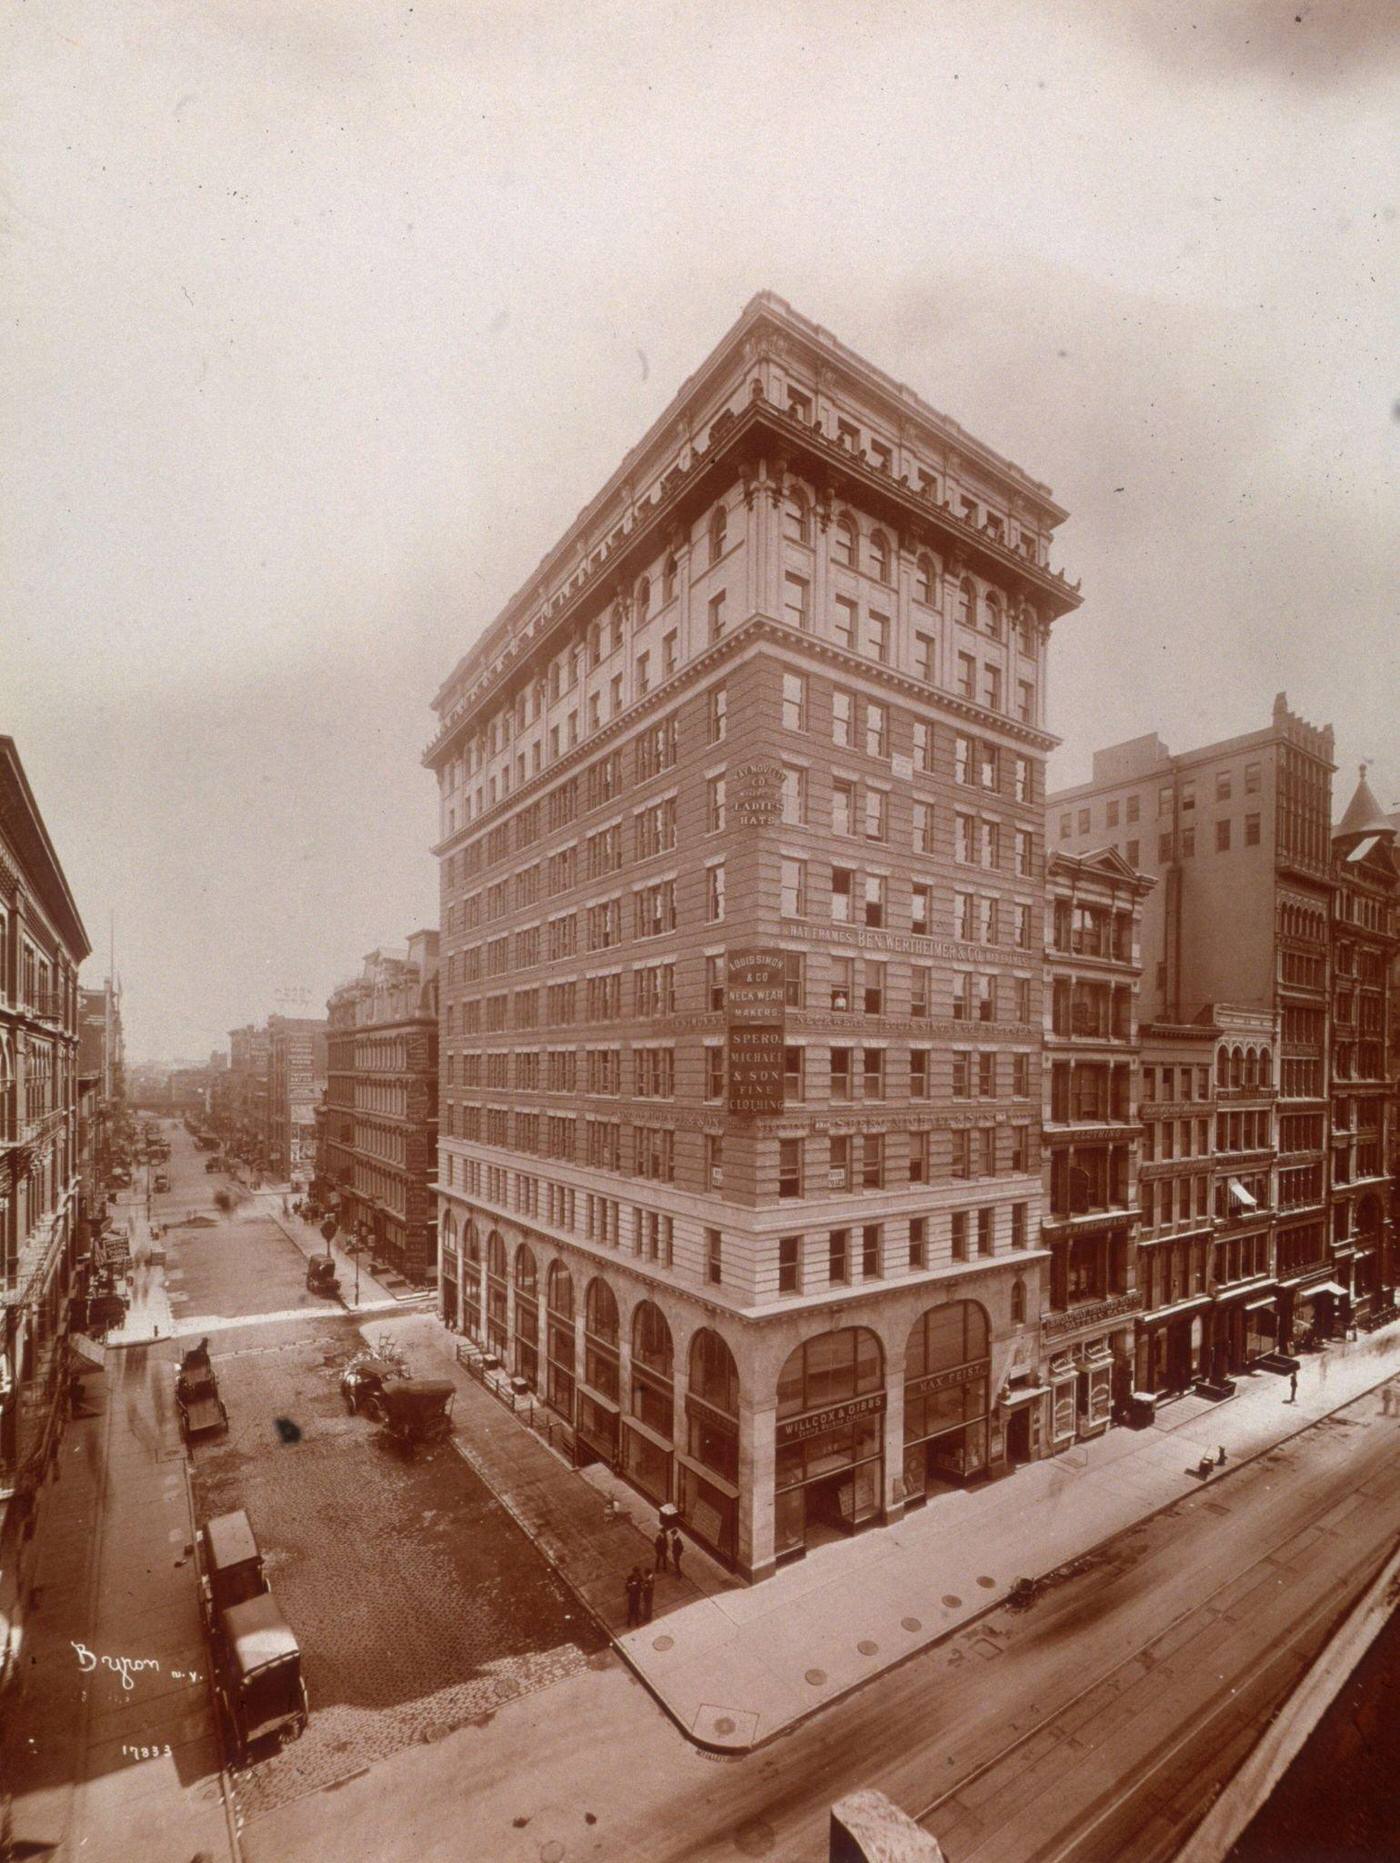 Building Housing Apparel Makers, Corner Of Broadway And Bond Street, New York City, Circa 1900